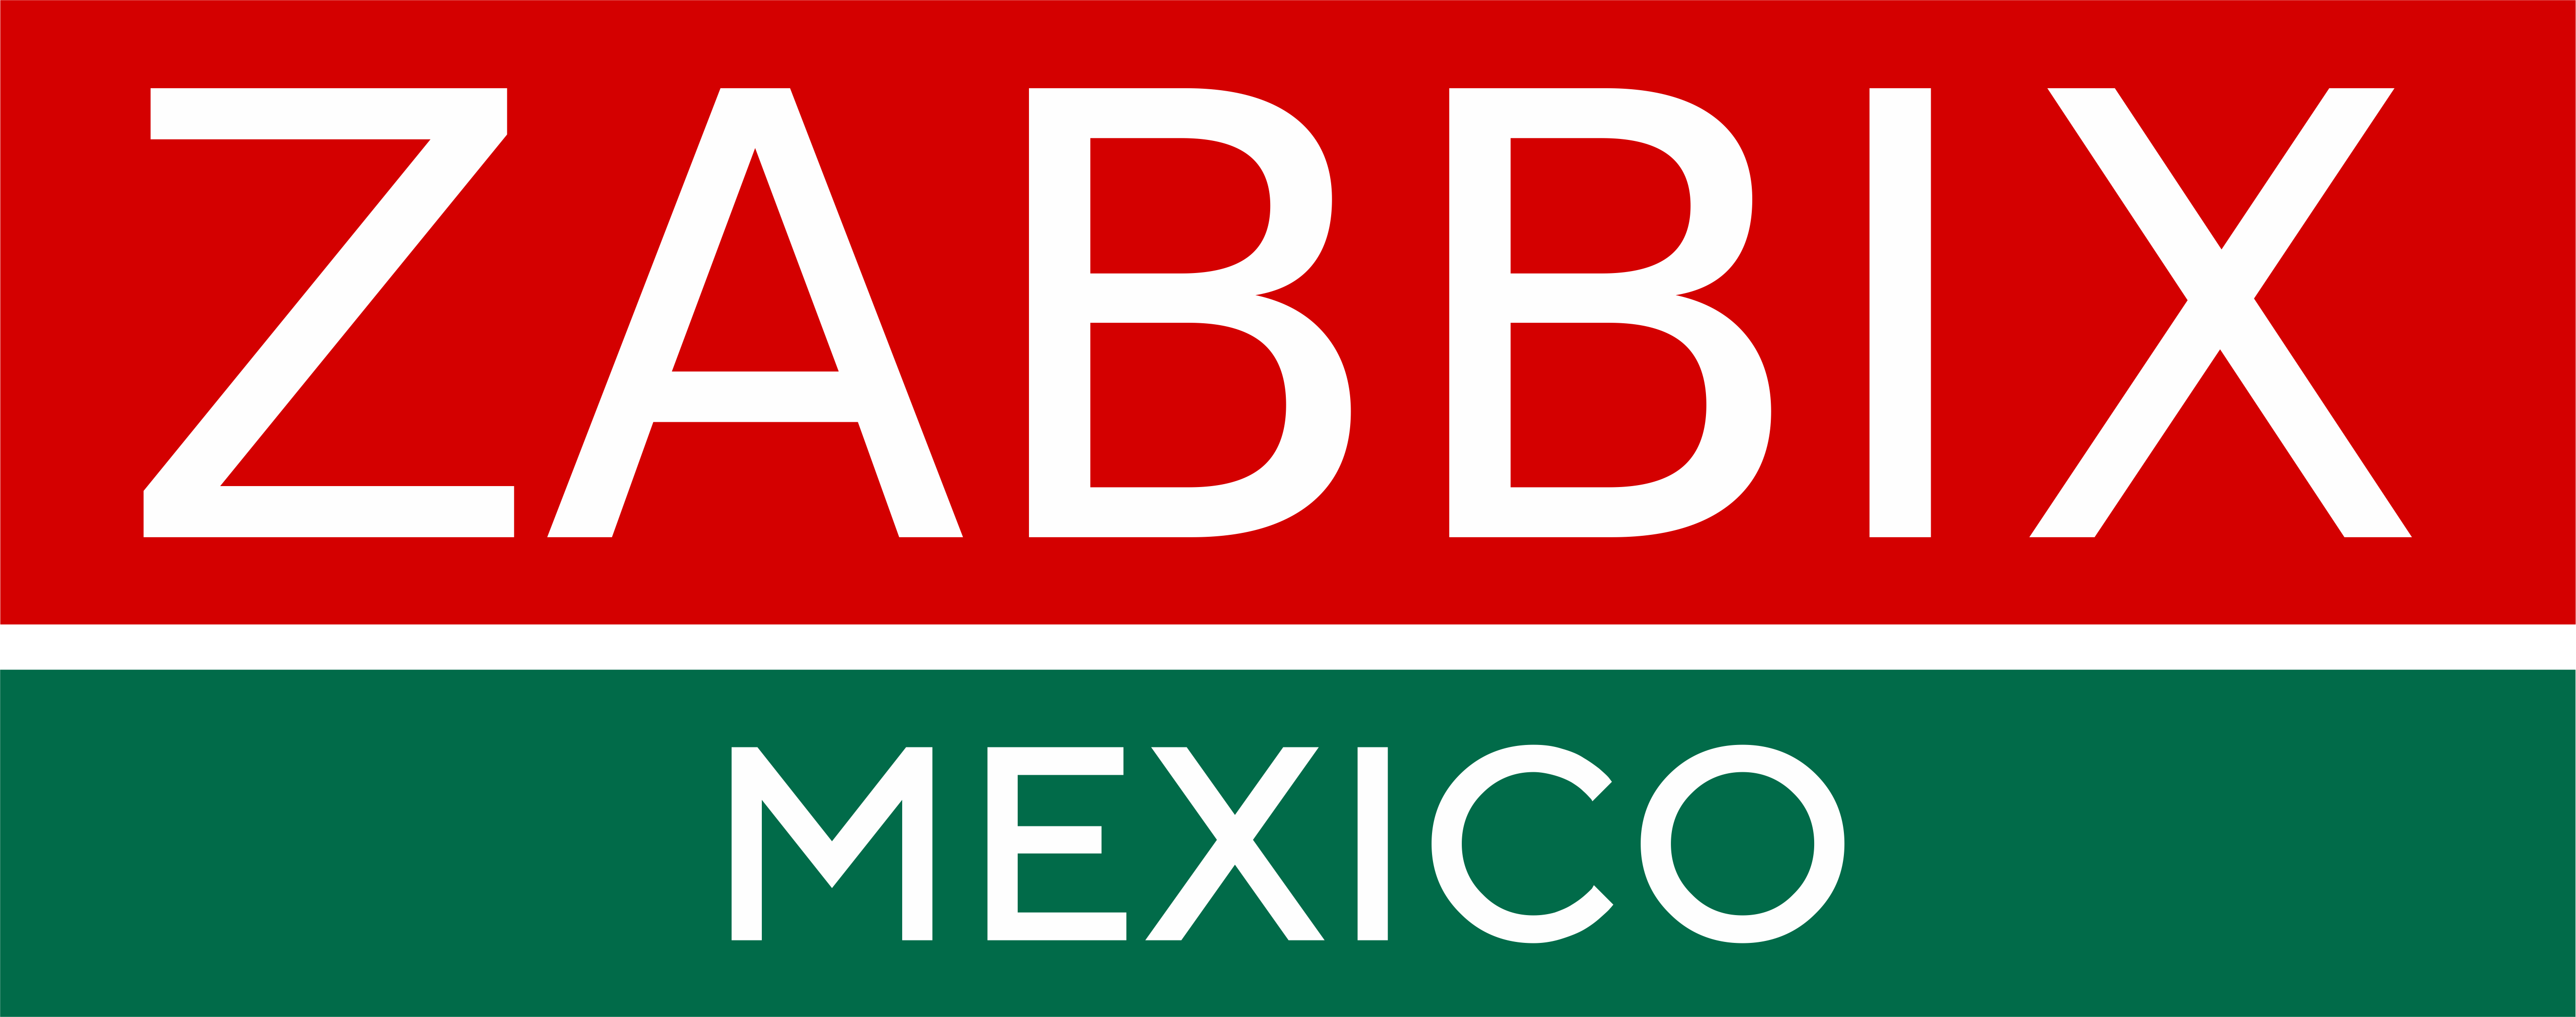 Únete al evento de apertura de la oficina de México